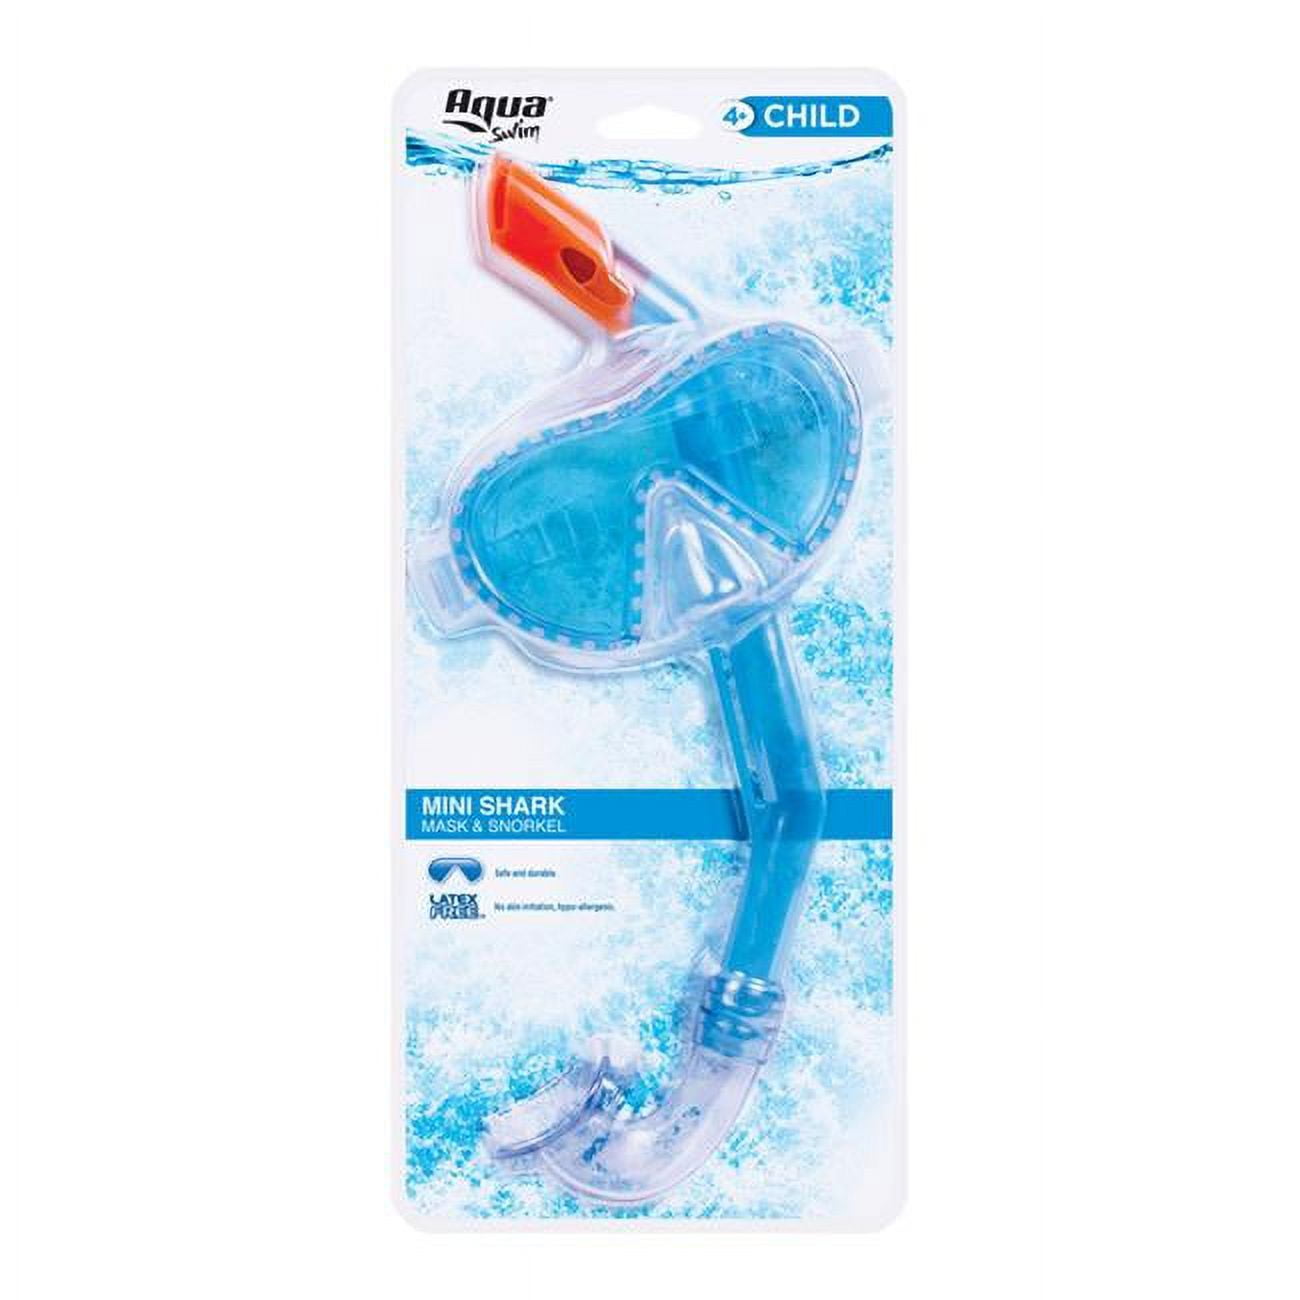 Picture of Aqua 8012817 Assorted Color Mask & Snorkel Set - Pack of 6